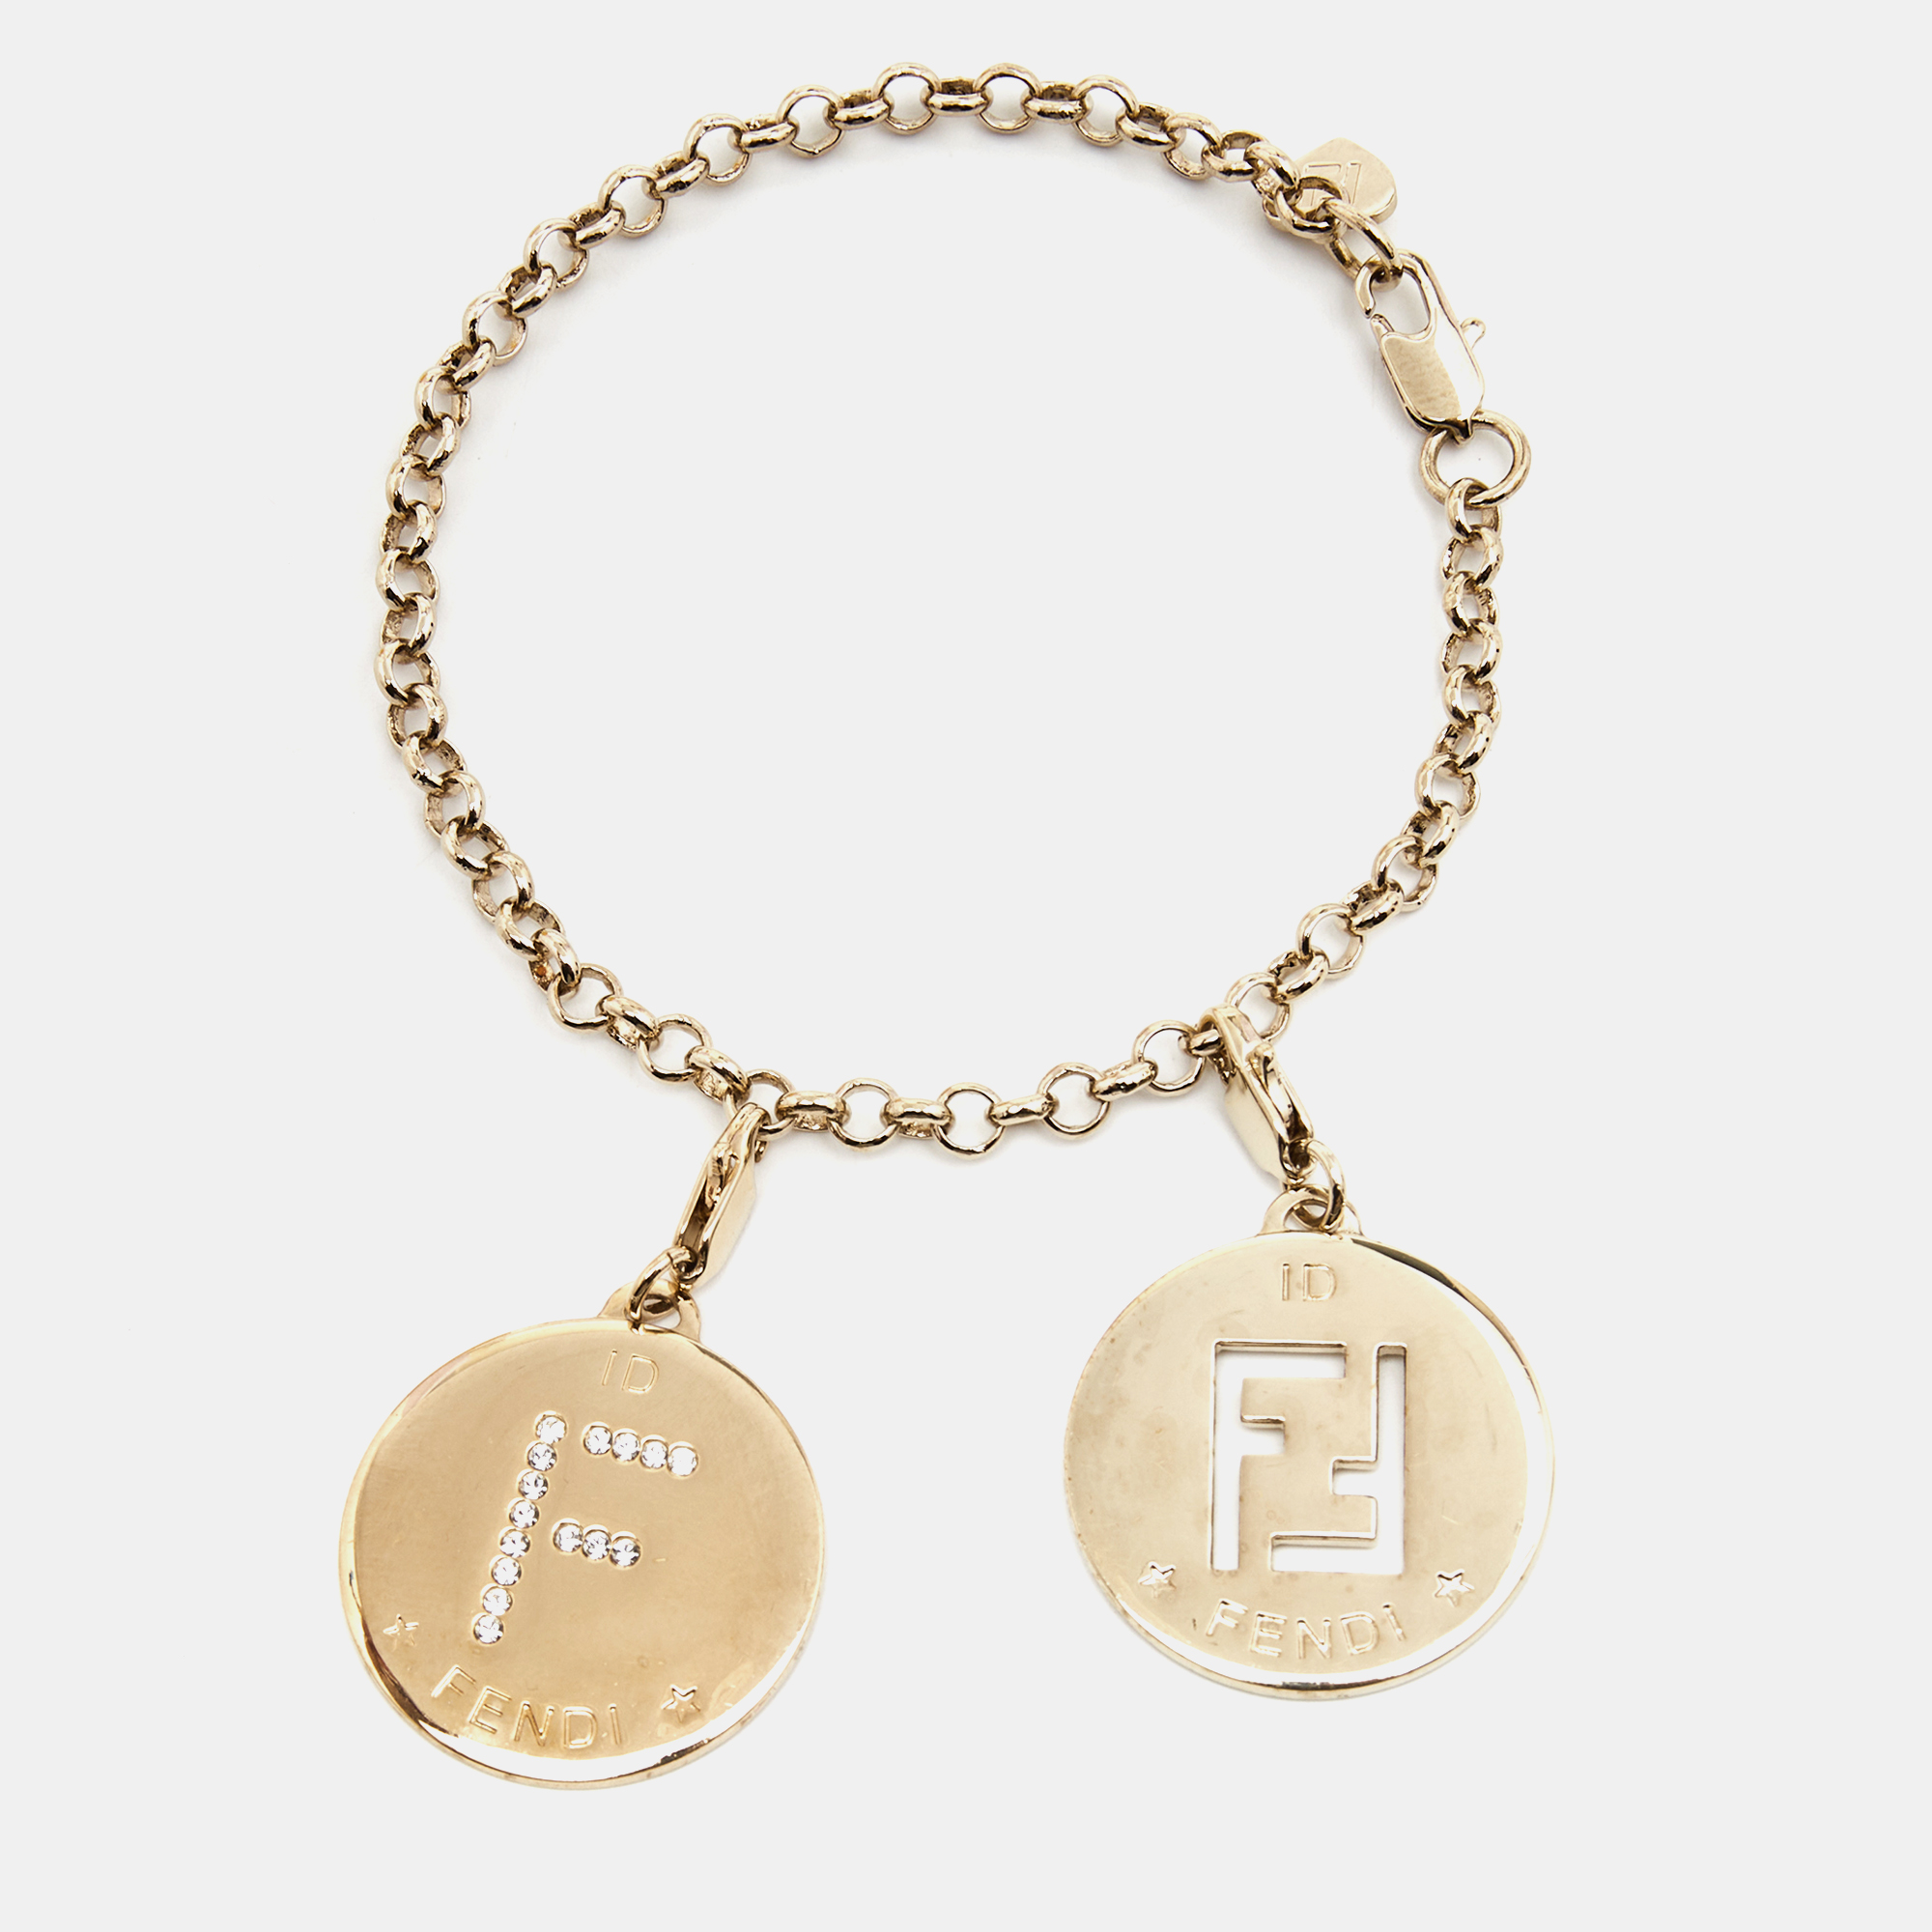 FENDI Fendi Gold Tone Baguette Bag Charm Bracelet